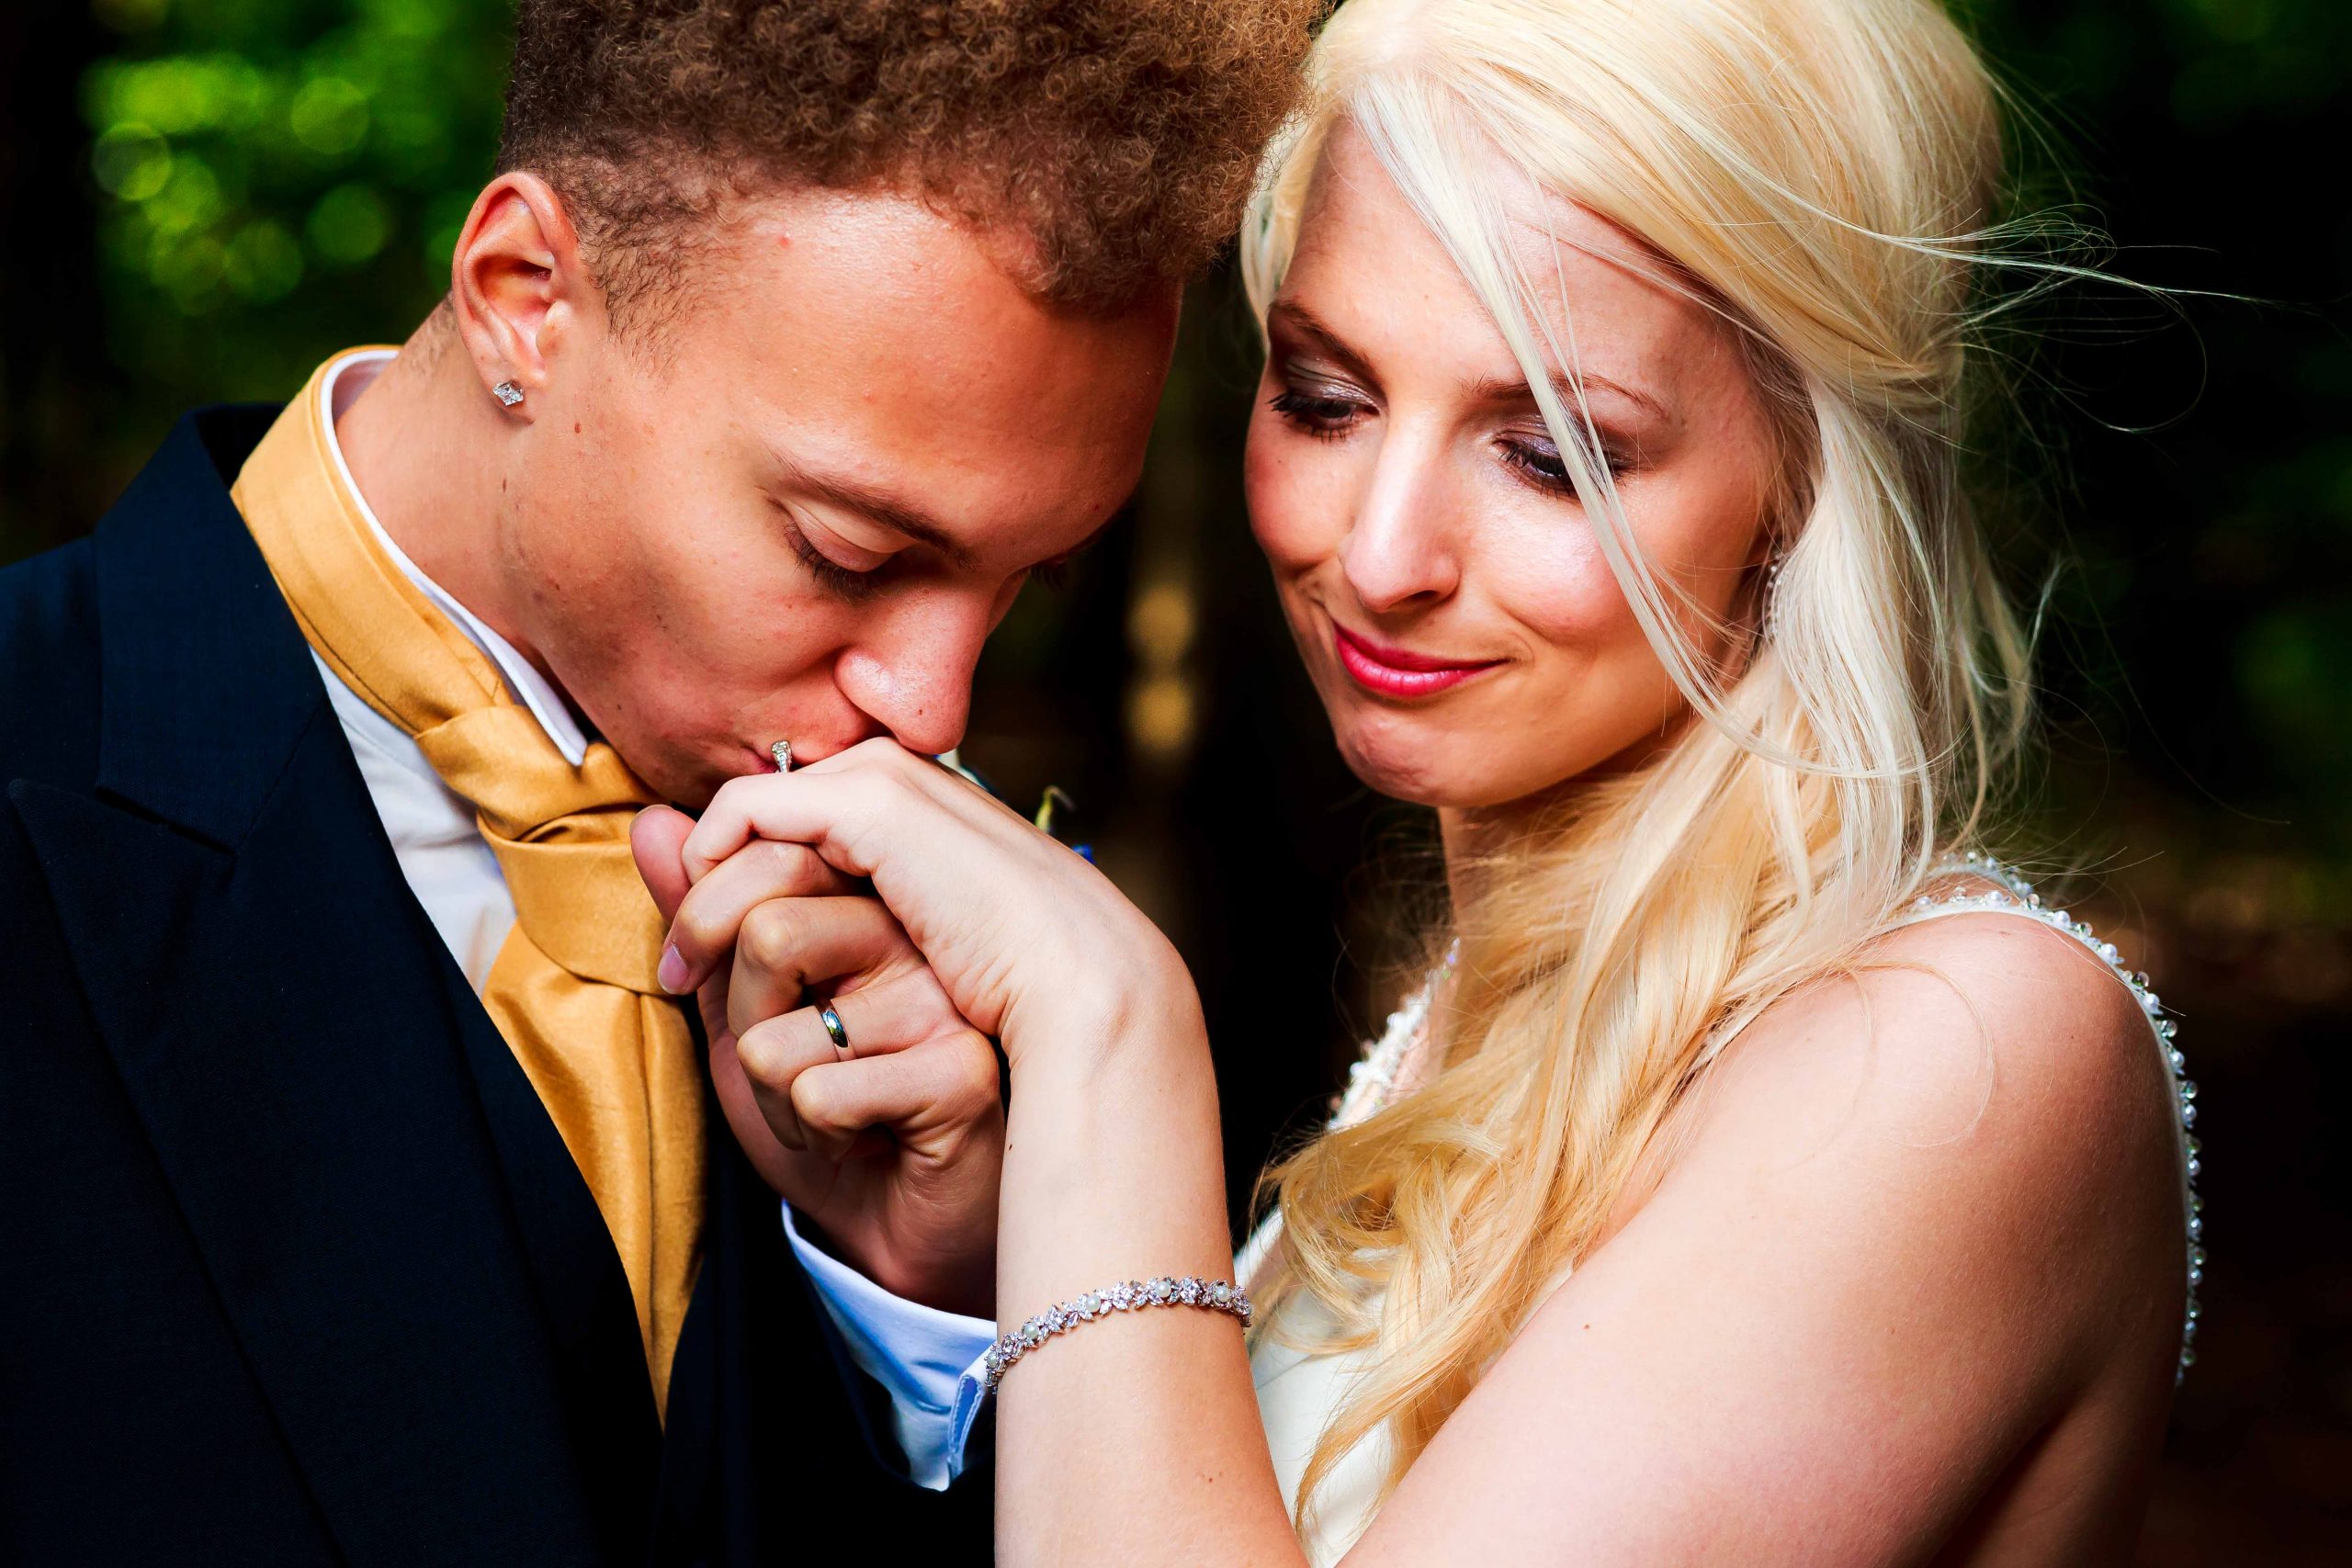 Groom kissing brides hand